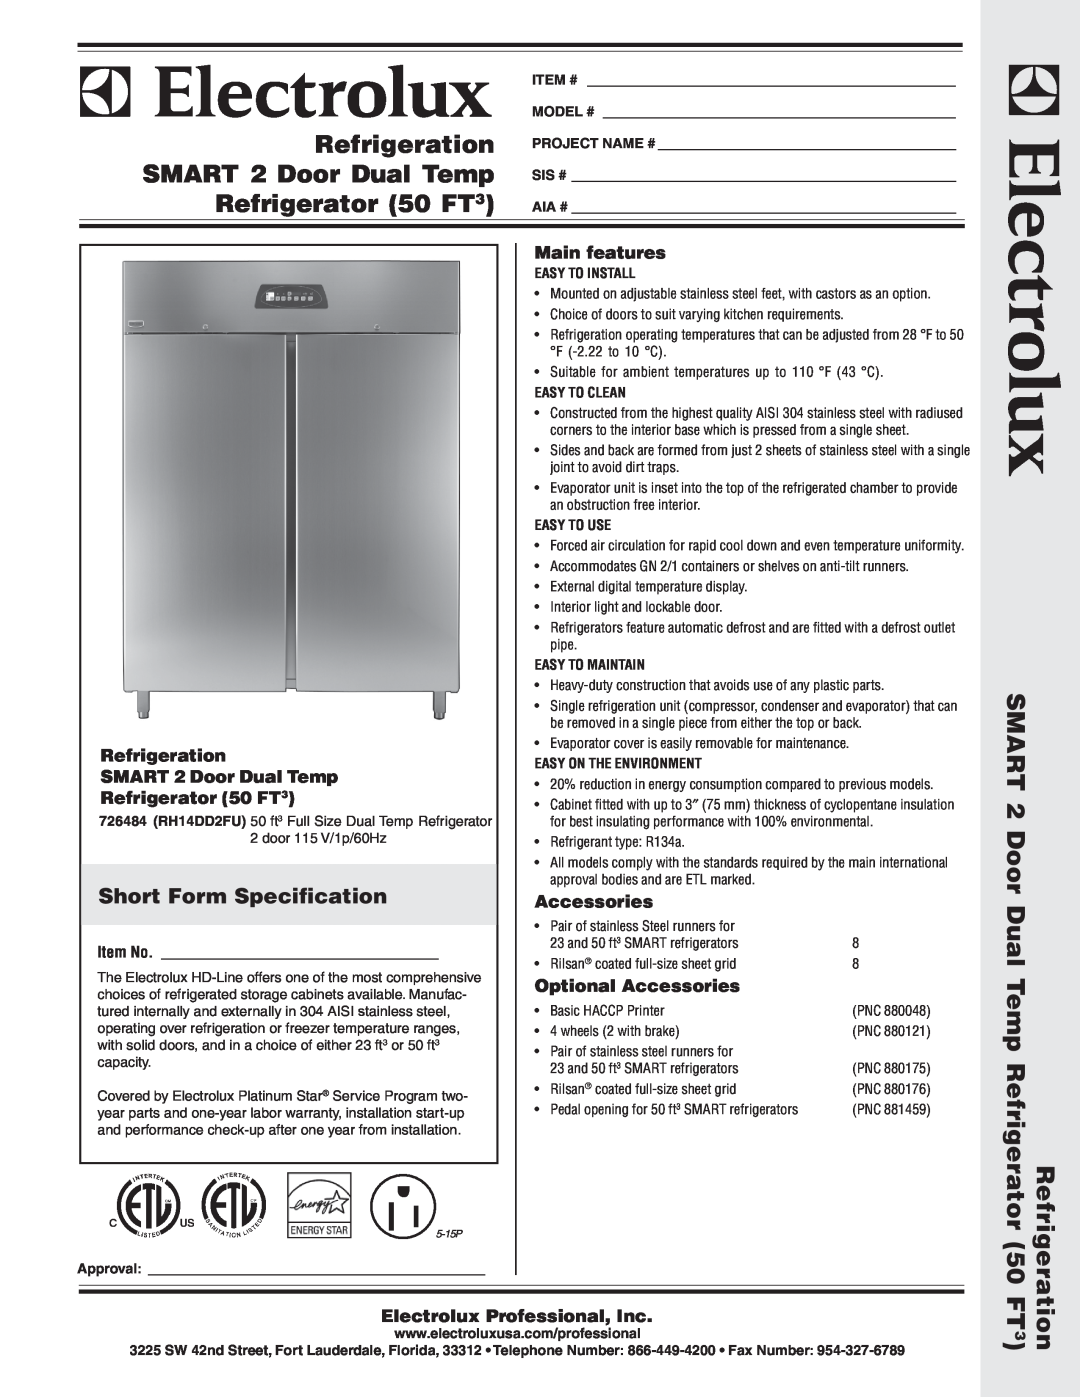 Electrolux 726484 warranty Short Form Specification, Main features, Refrigeration, SMART 2 Door Dual Temp, Accessories 